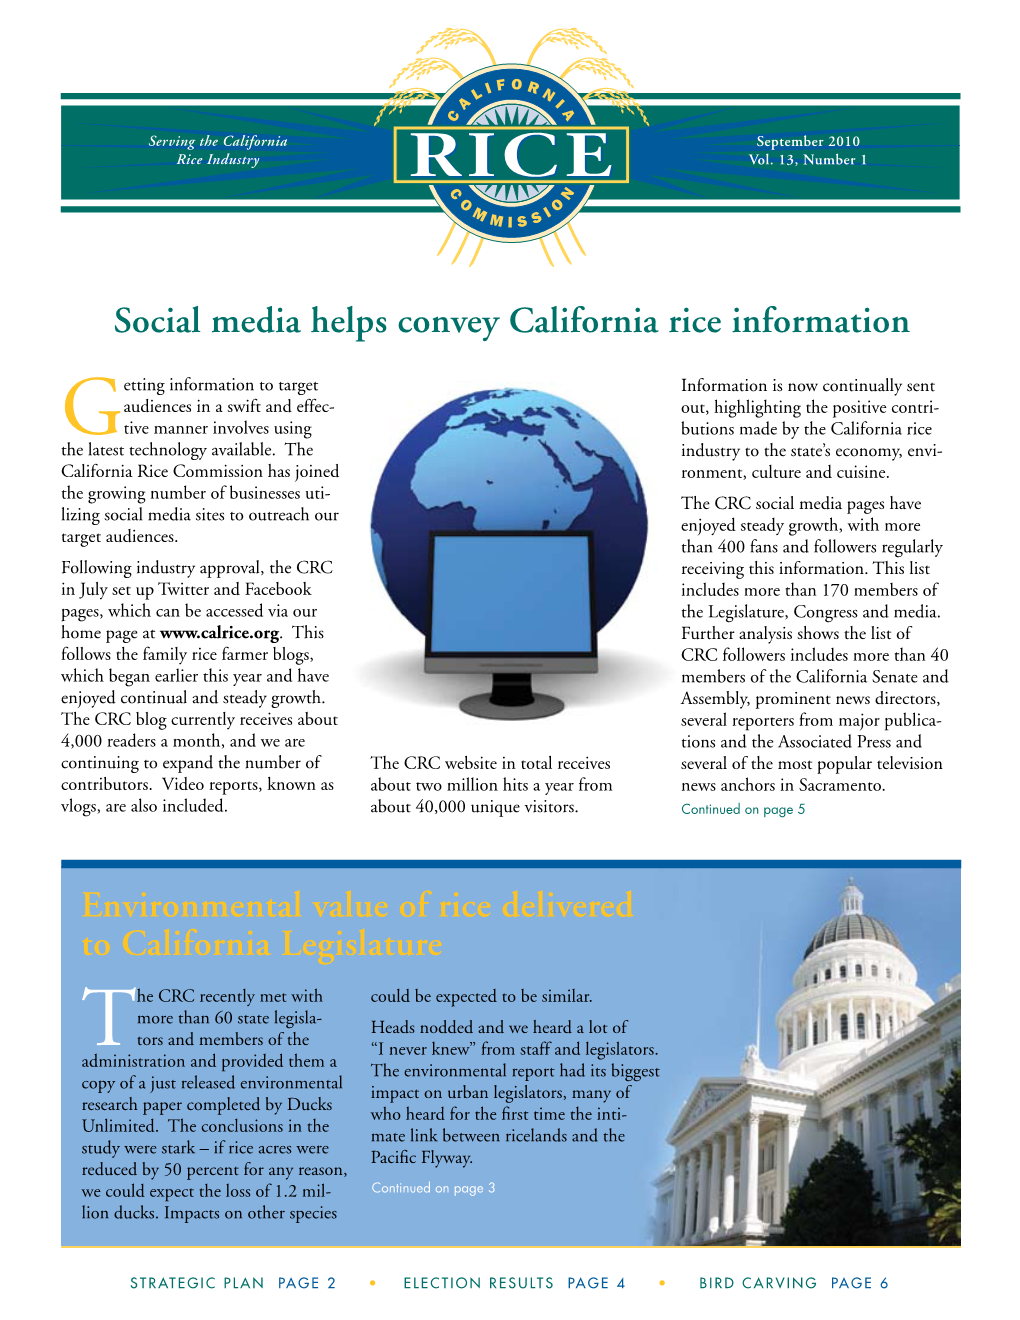 Social Media Helps Convey California Rice Information Environmental